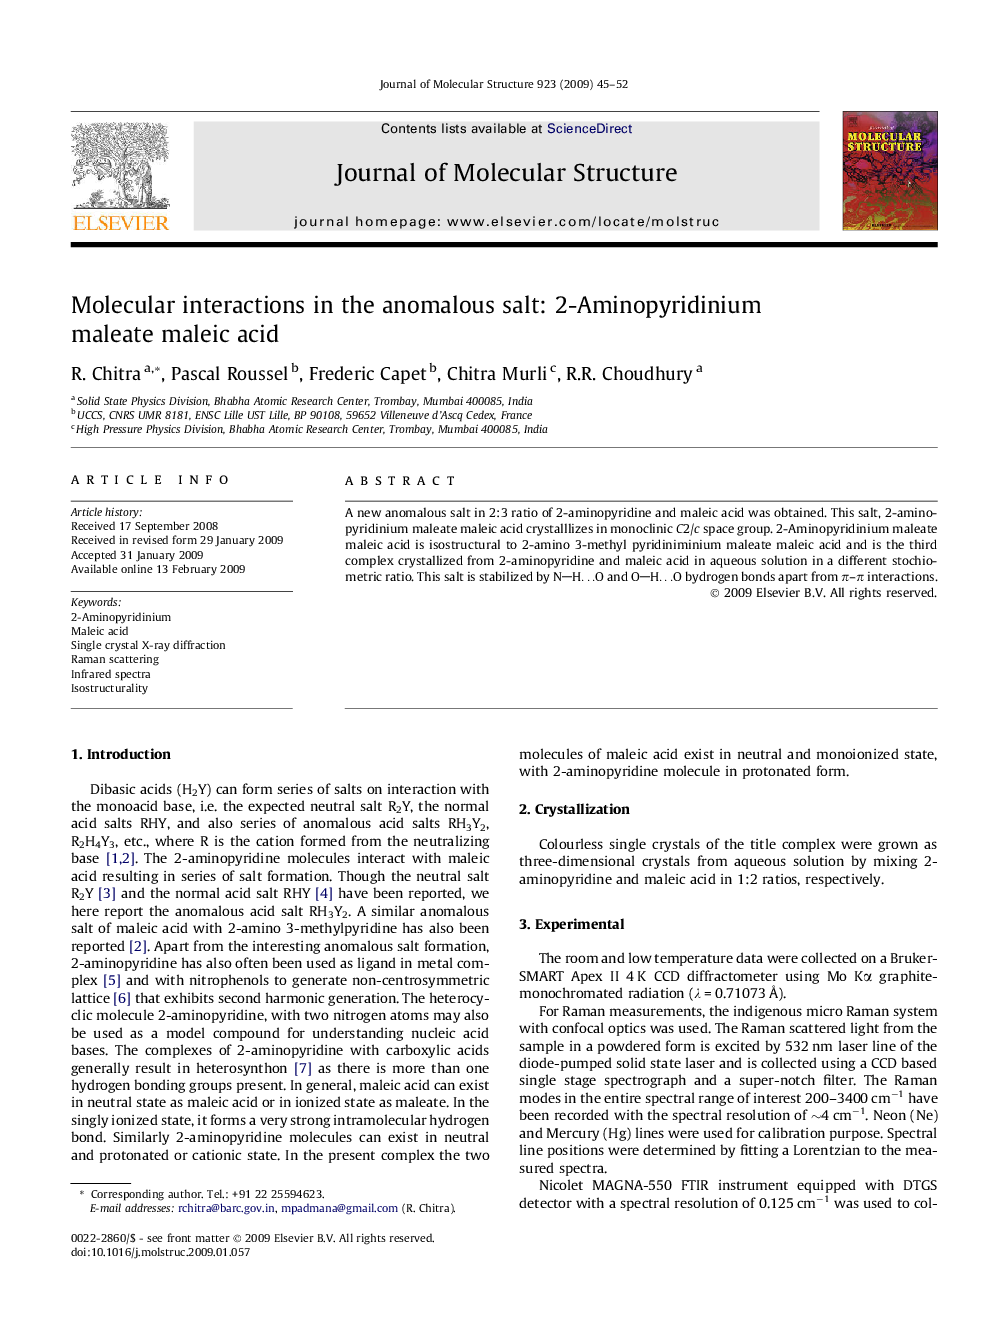 Molecular interactions in the anomalous salt: 2-Aminopyridinium maleate maleic acid